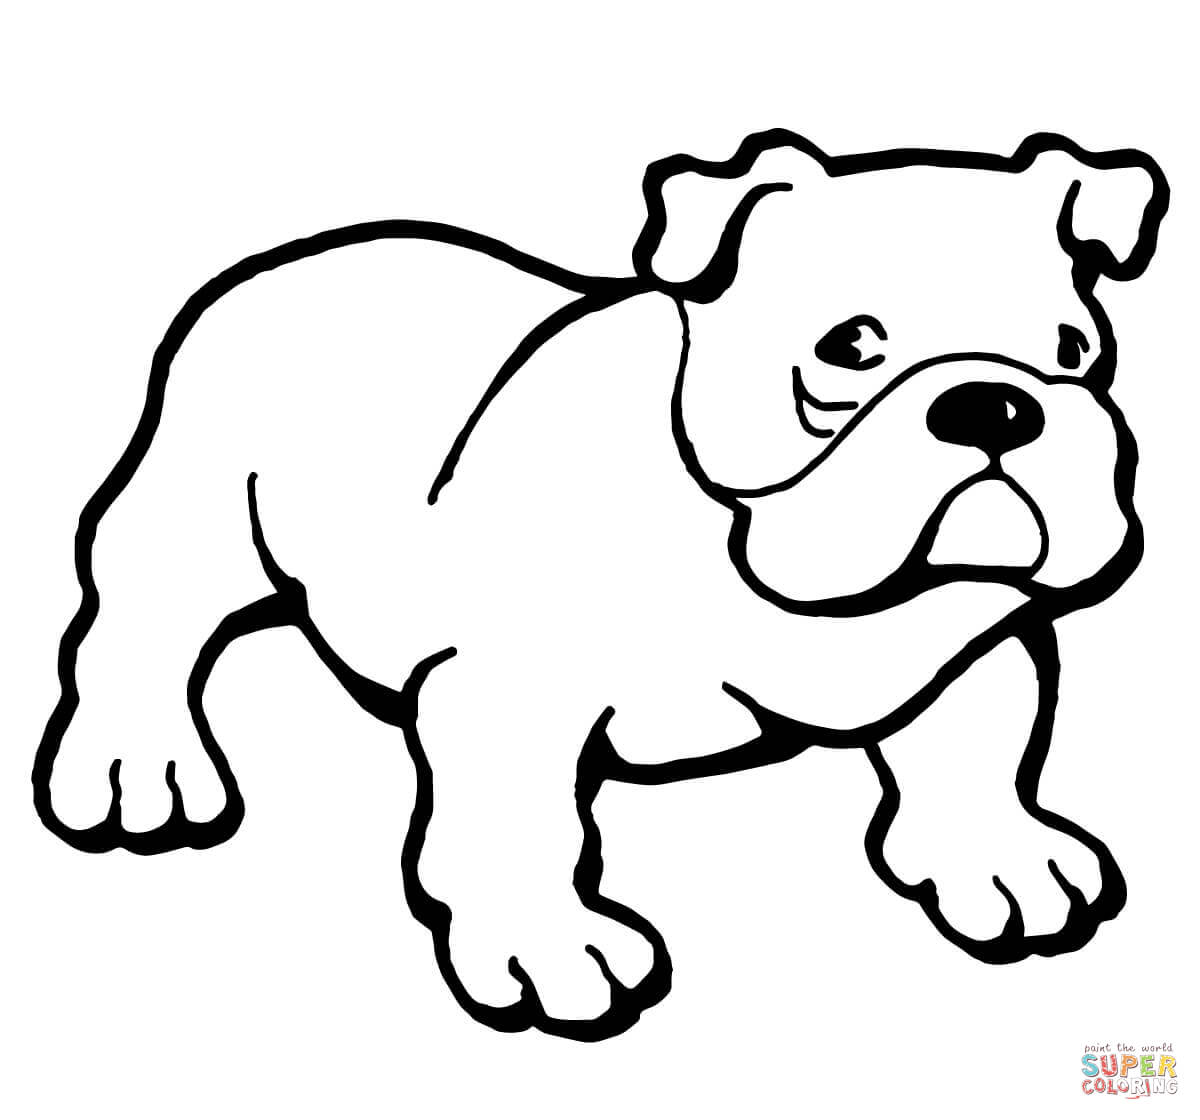 Bulldog coloring page | Free Printable Coloring Pages